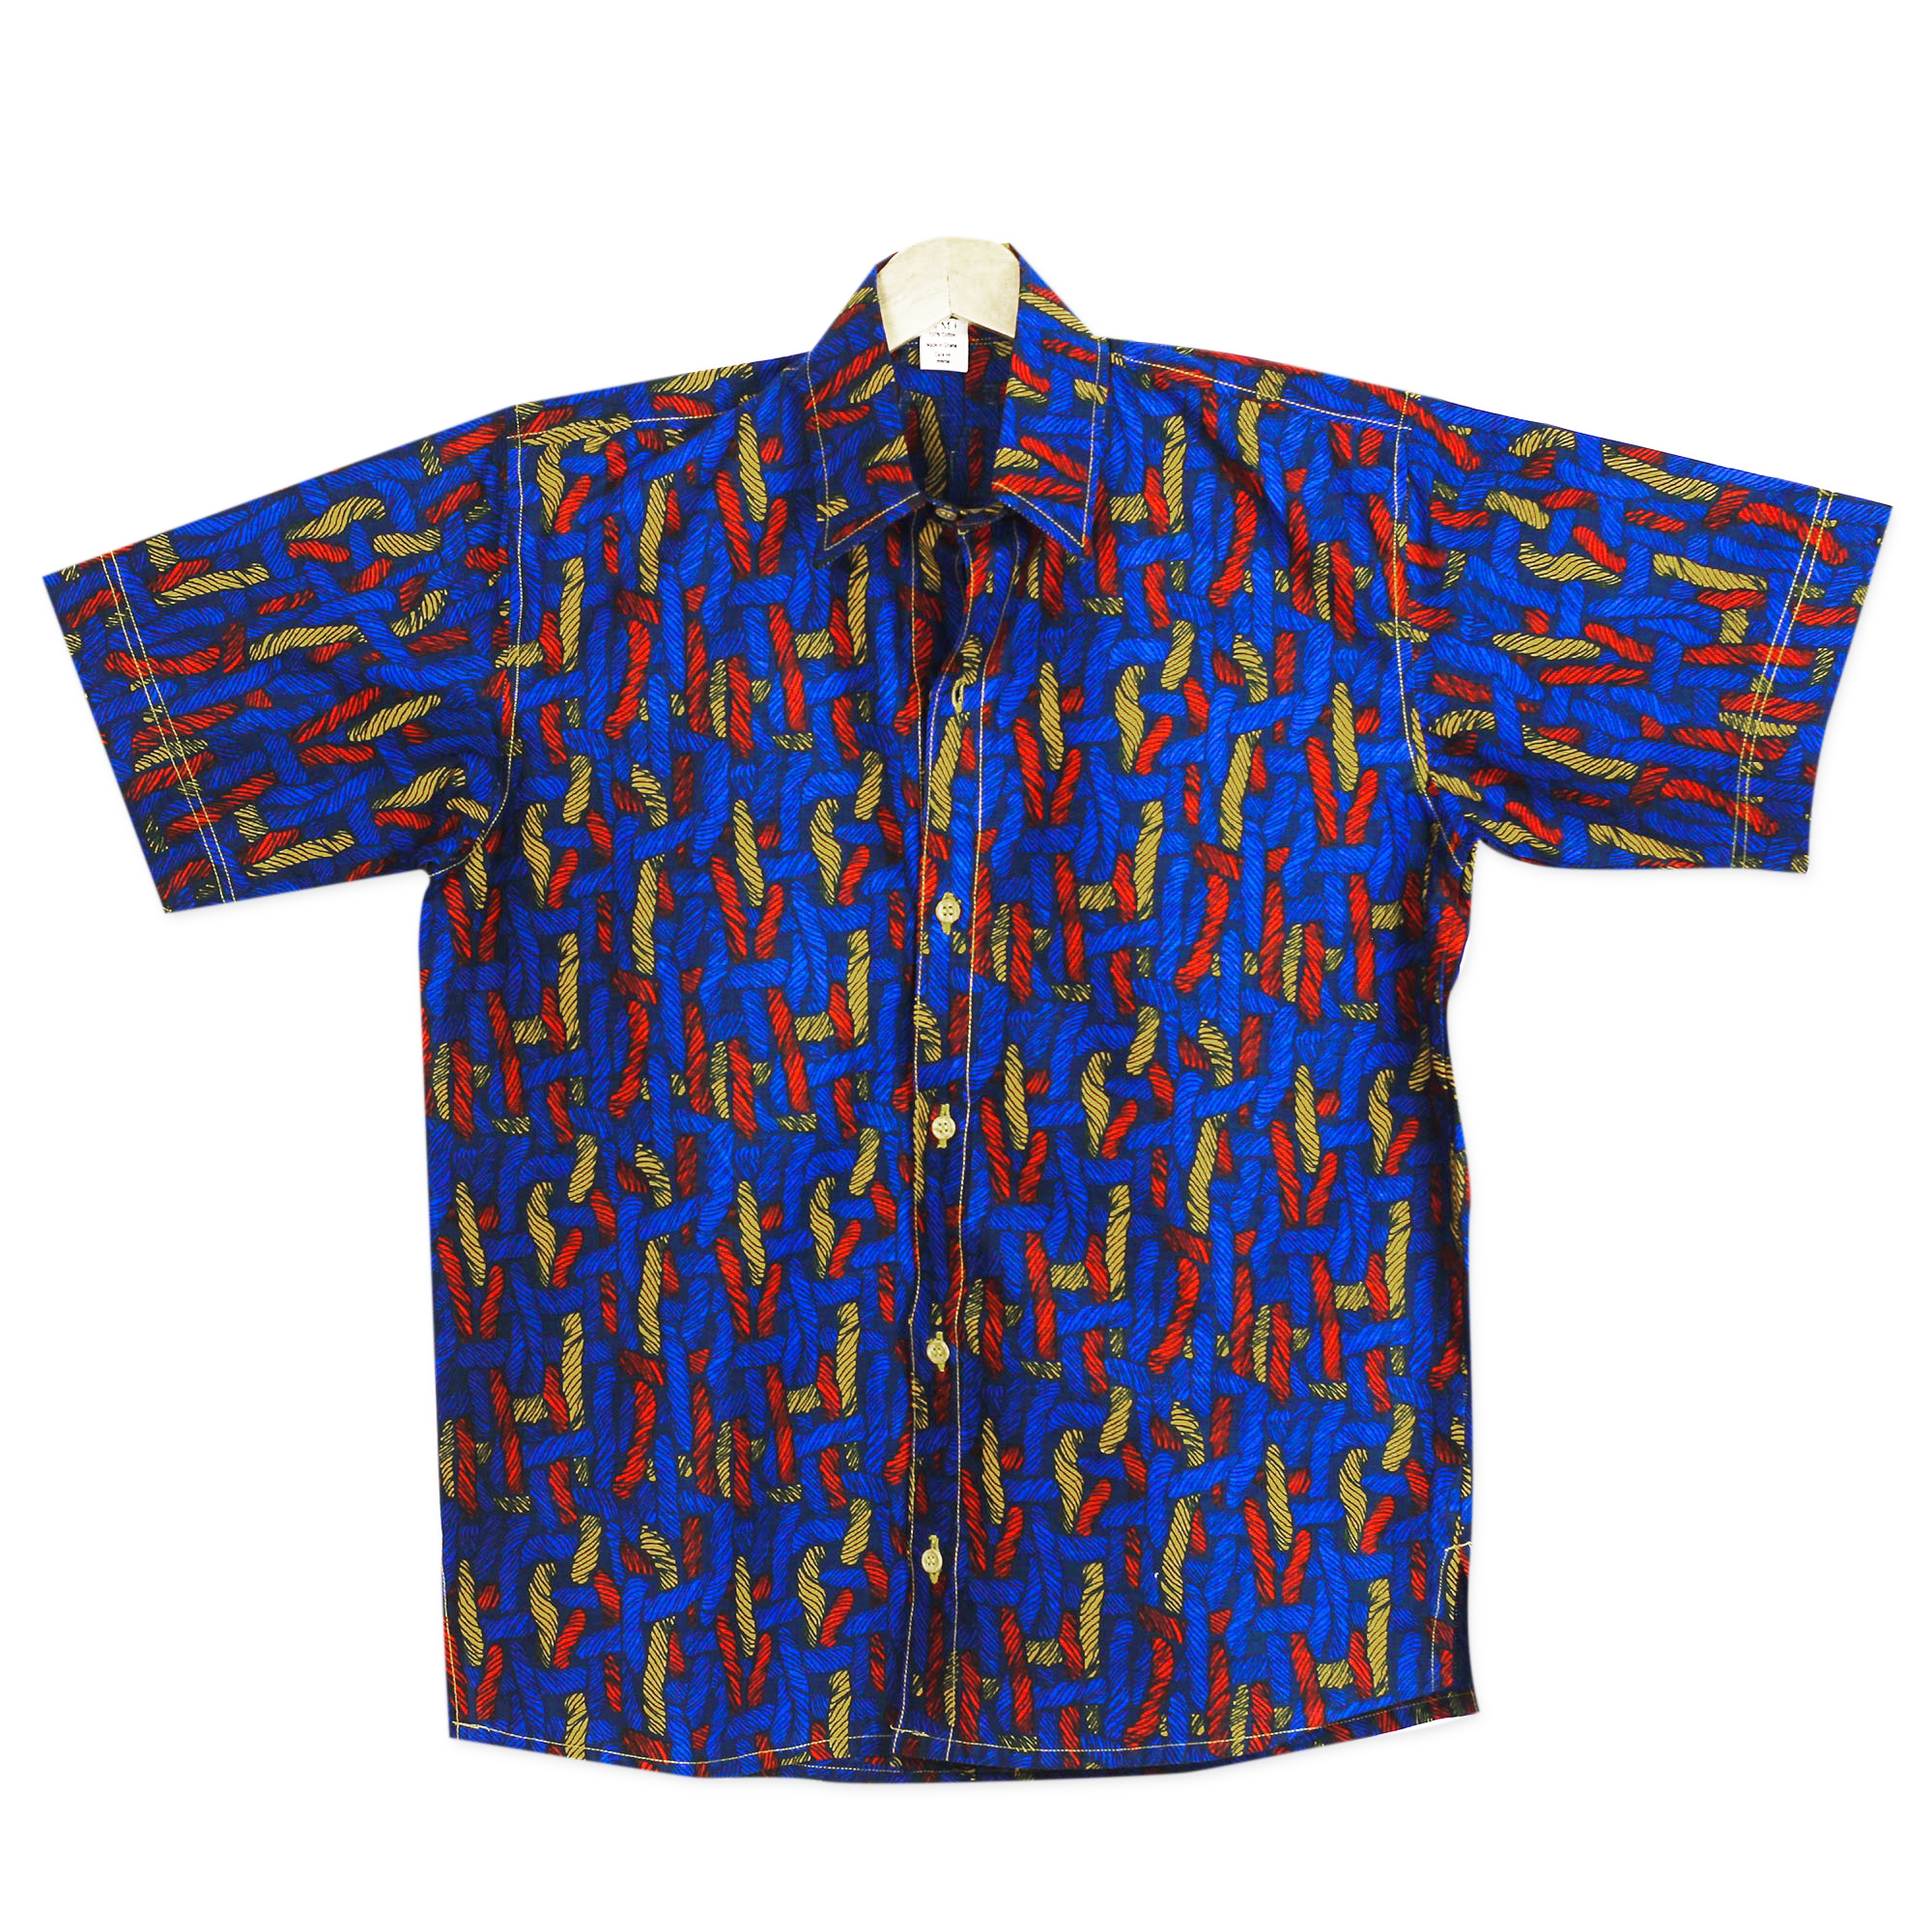 Yarn Motif Men's Printed Cotton Shirt from Ghana - Colorful Yarn | NOVICA